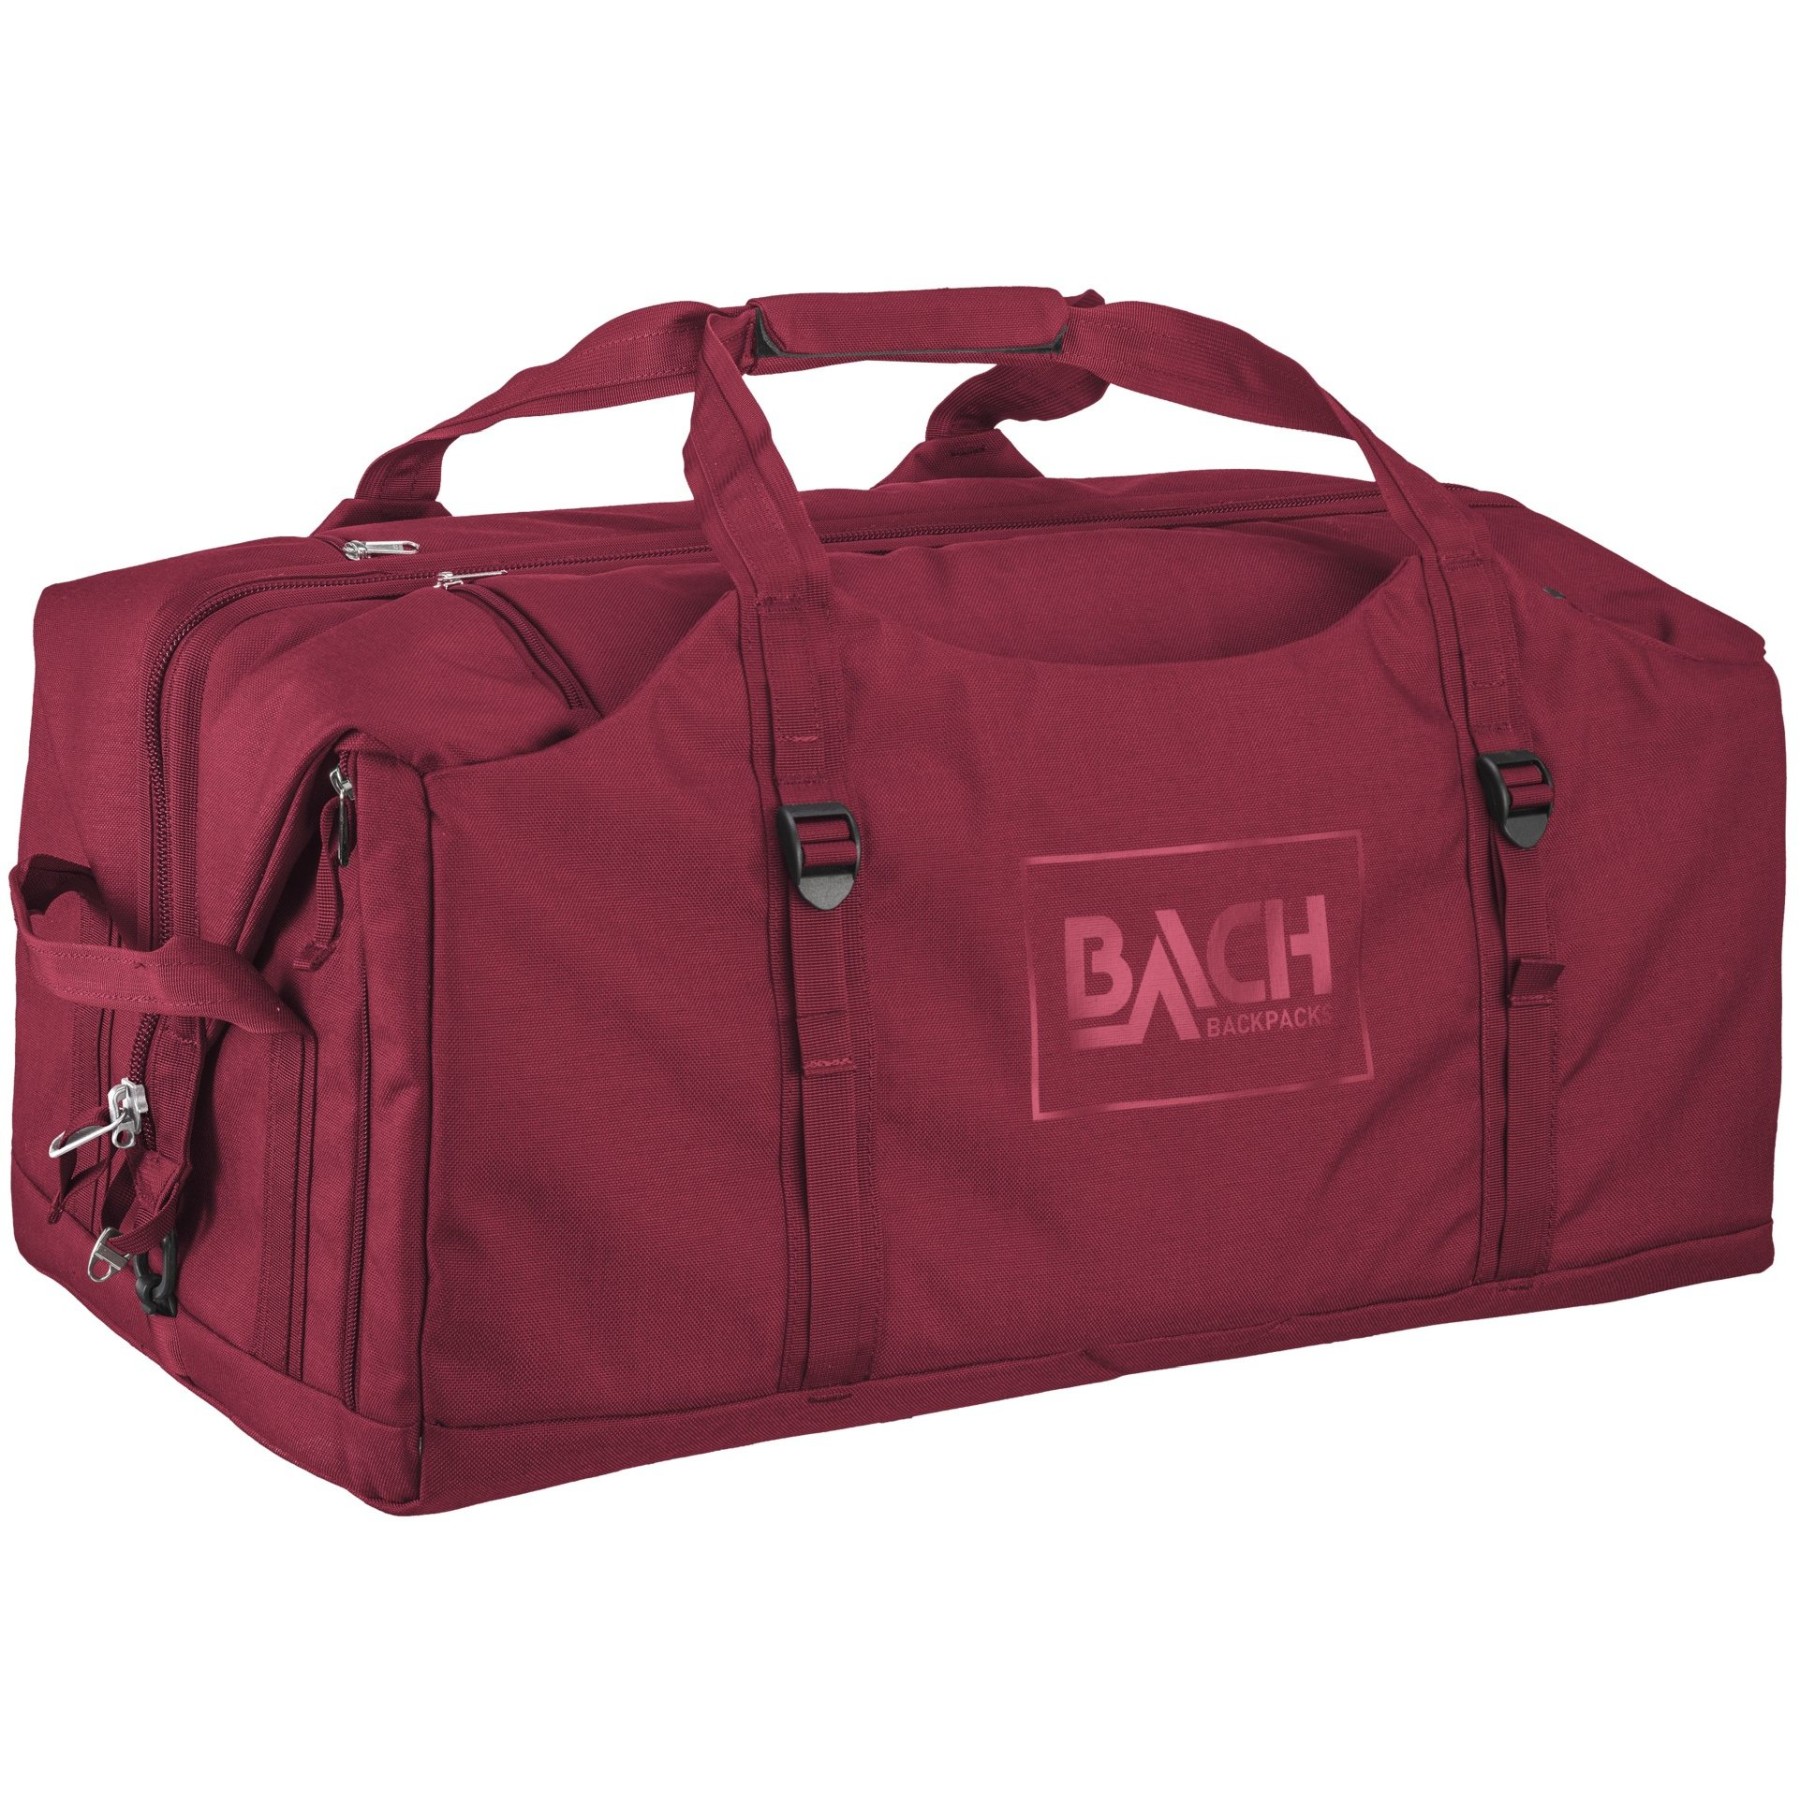 Productfoto van Bach Dr. Duffel 70 Travel Bag - red